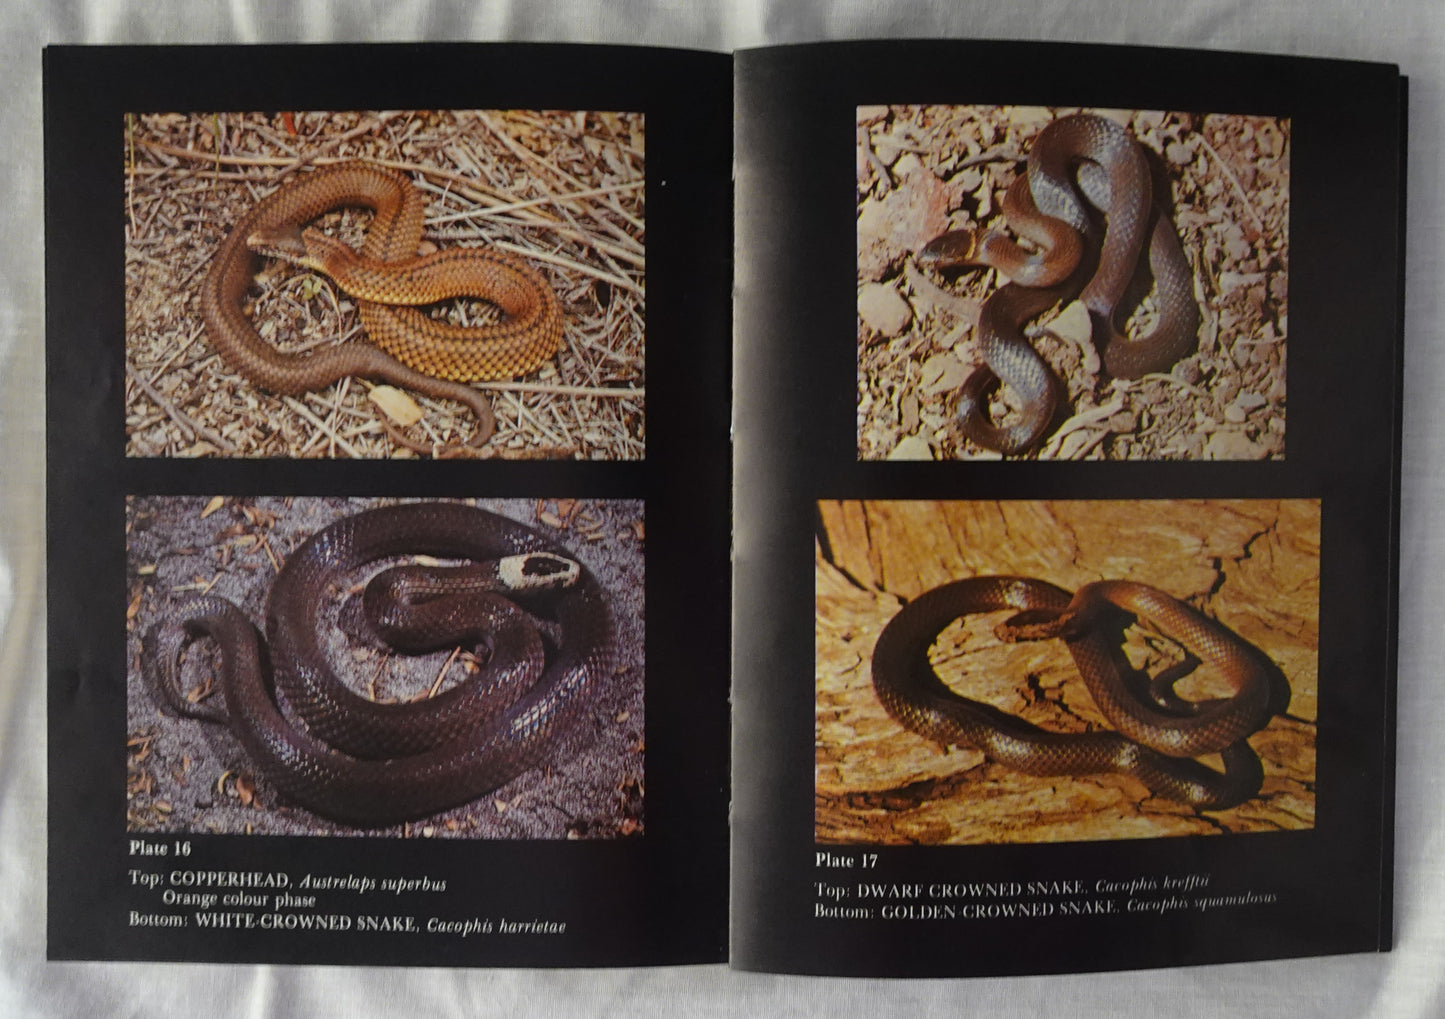 Snakes of Australia by Graeme F. Gow